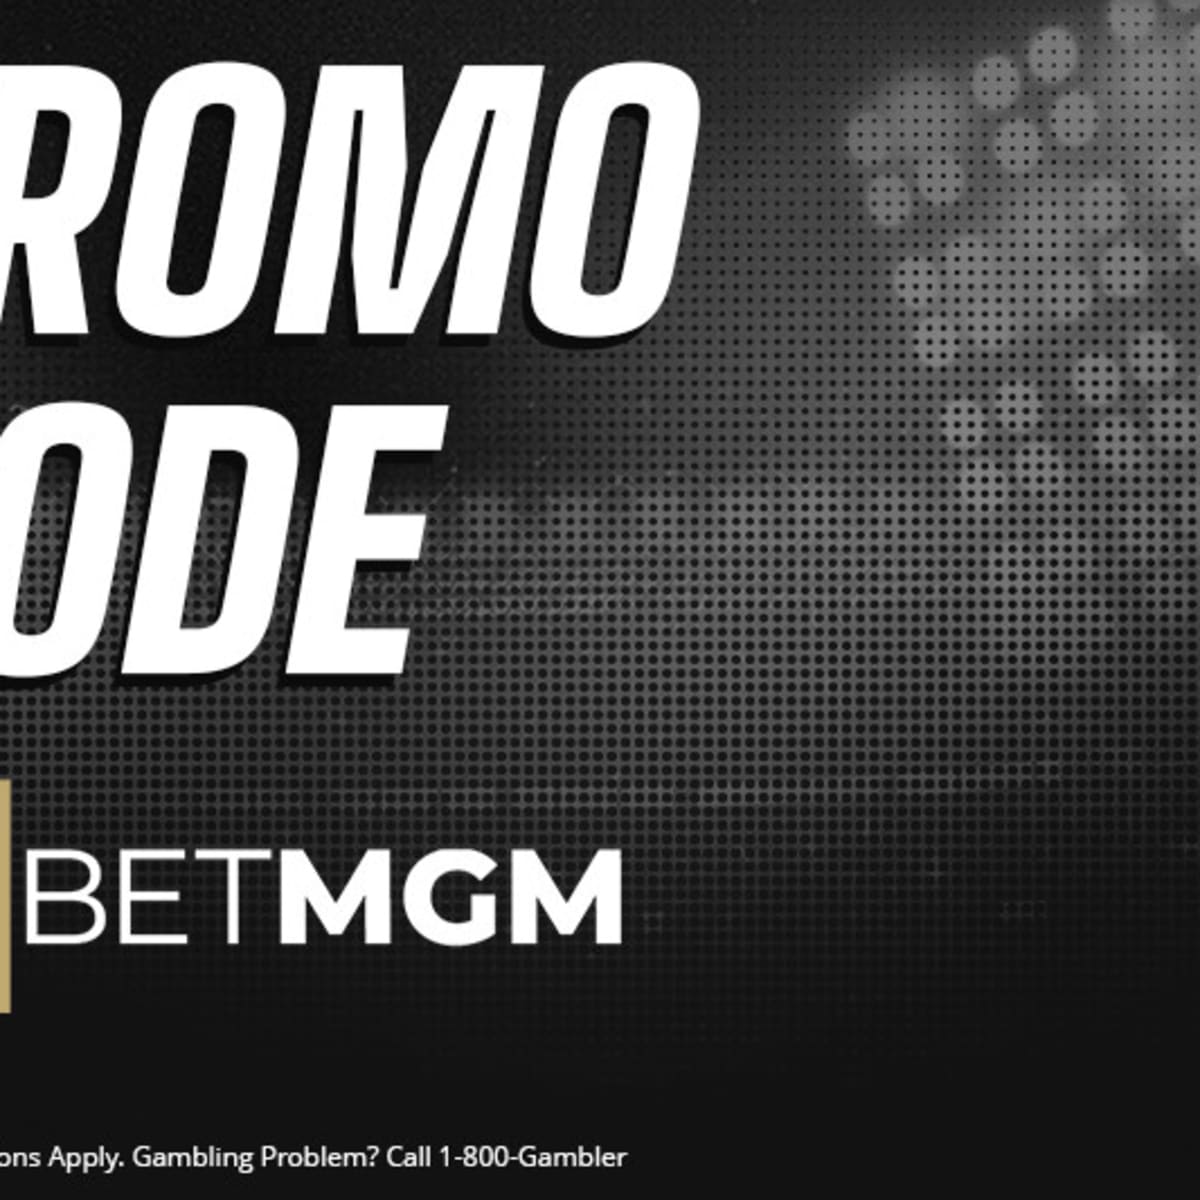 BetMGM Bonus Code SHNEWS1500 Earns Your 20% Match or $200 All Week